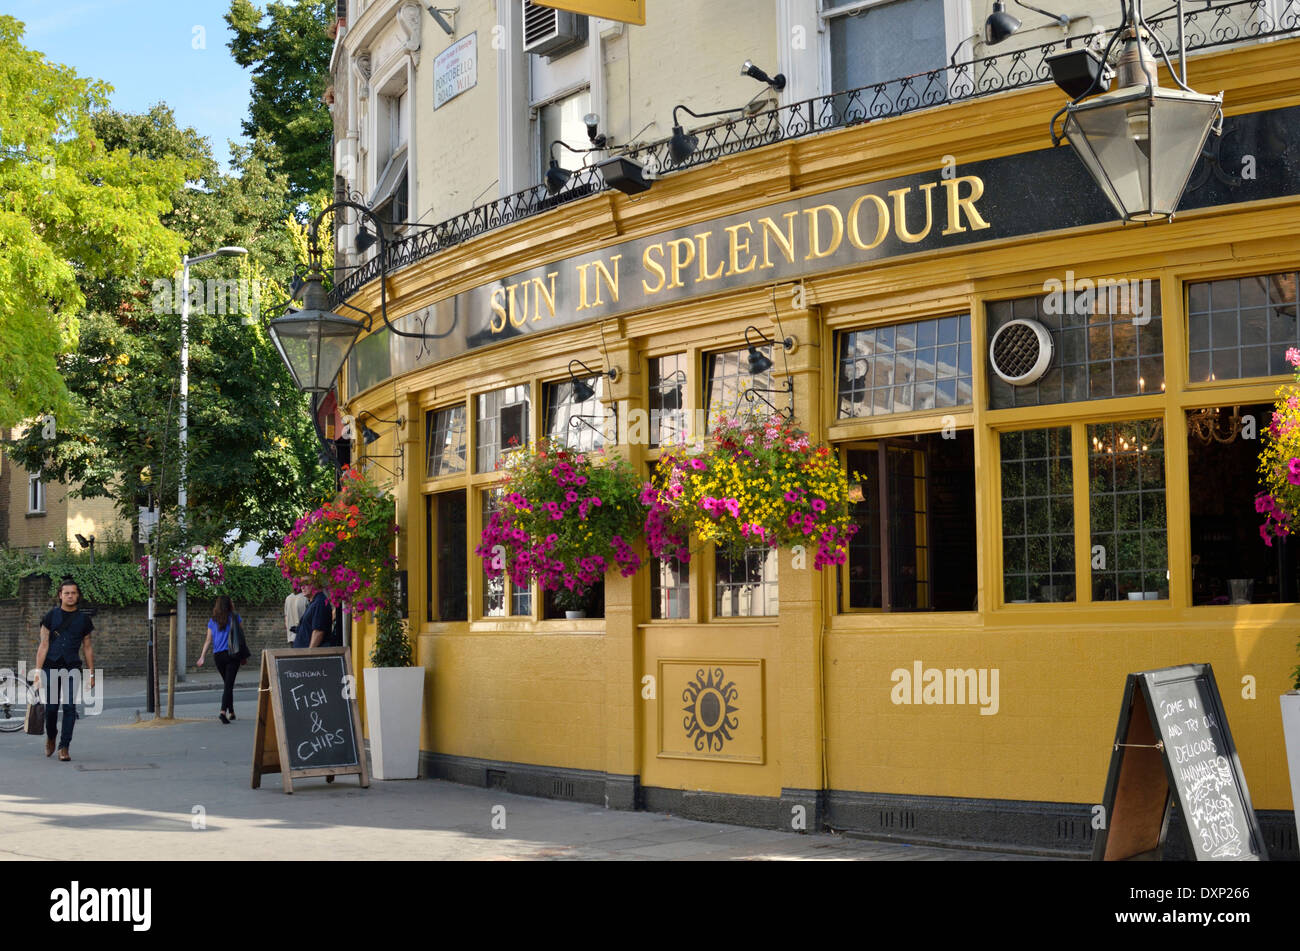 The Sun in Splendour pub in Portobello Road, Notting Hill, London, UK. Stock Photo